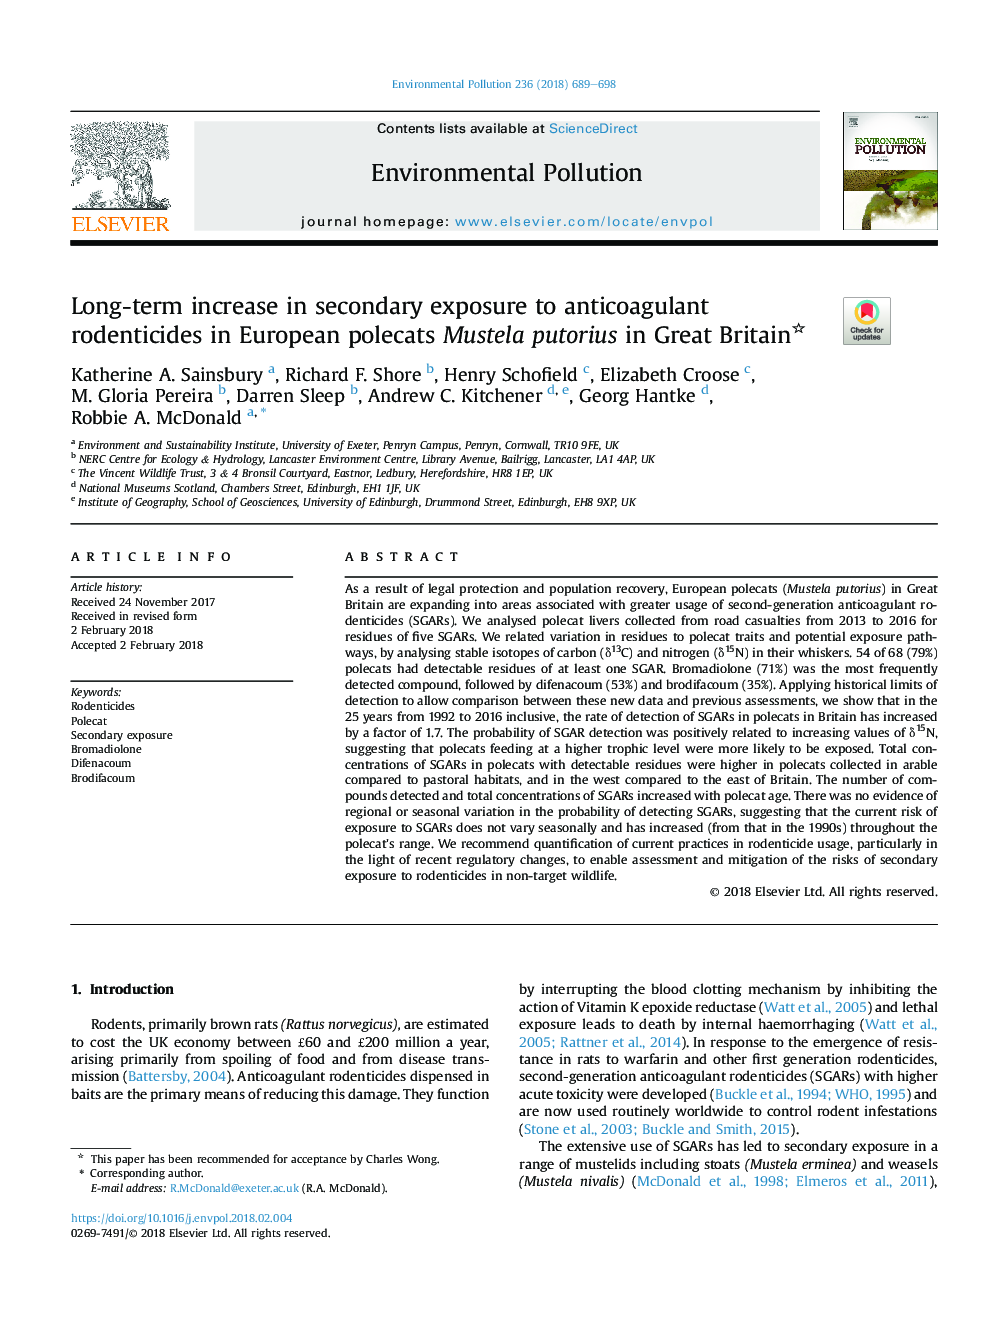 Long-term increase in secondary exposure to anticoagulant rodenticides in European polecats Mustela putorius in Great Britain